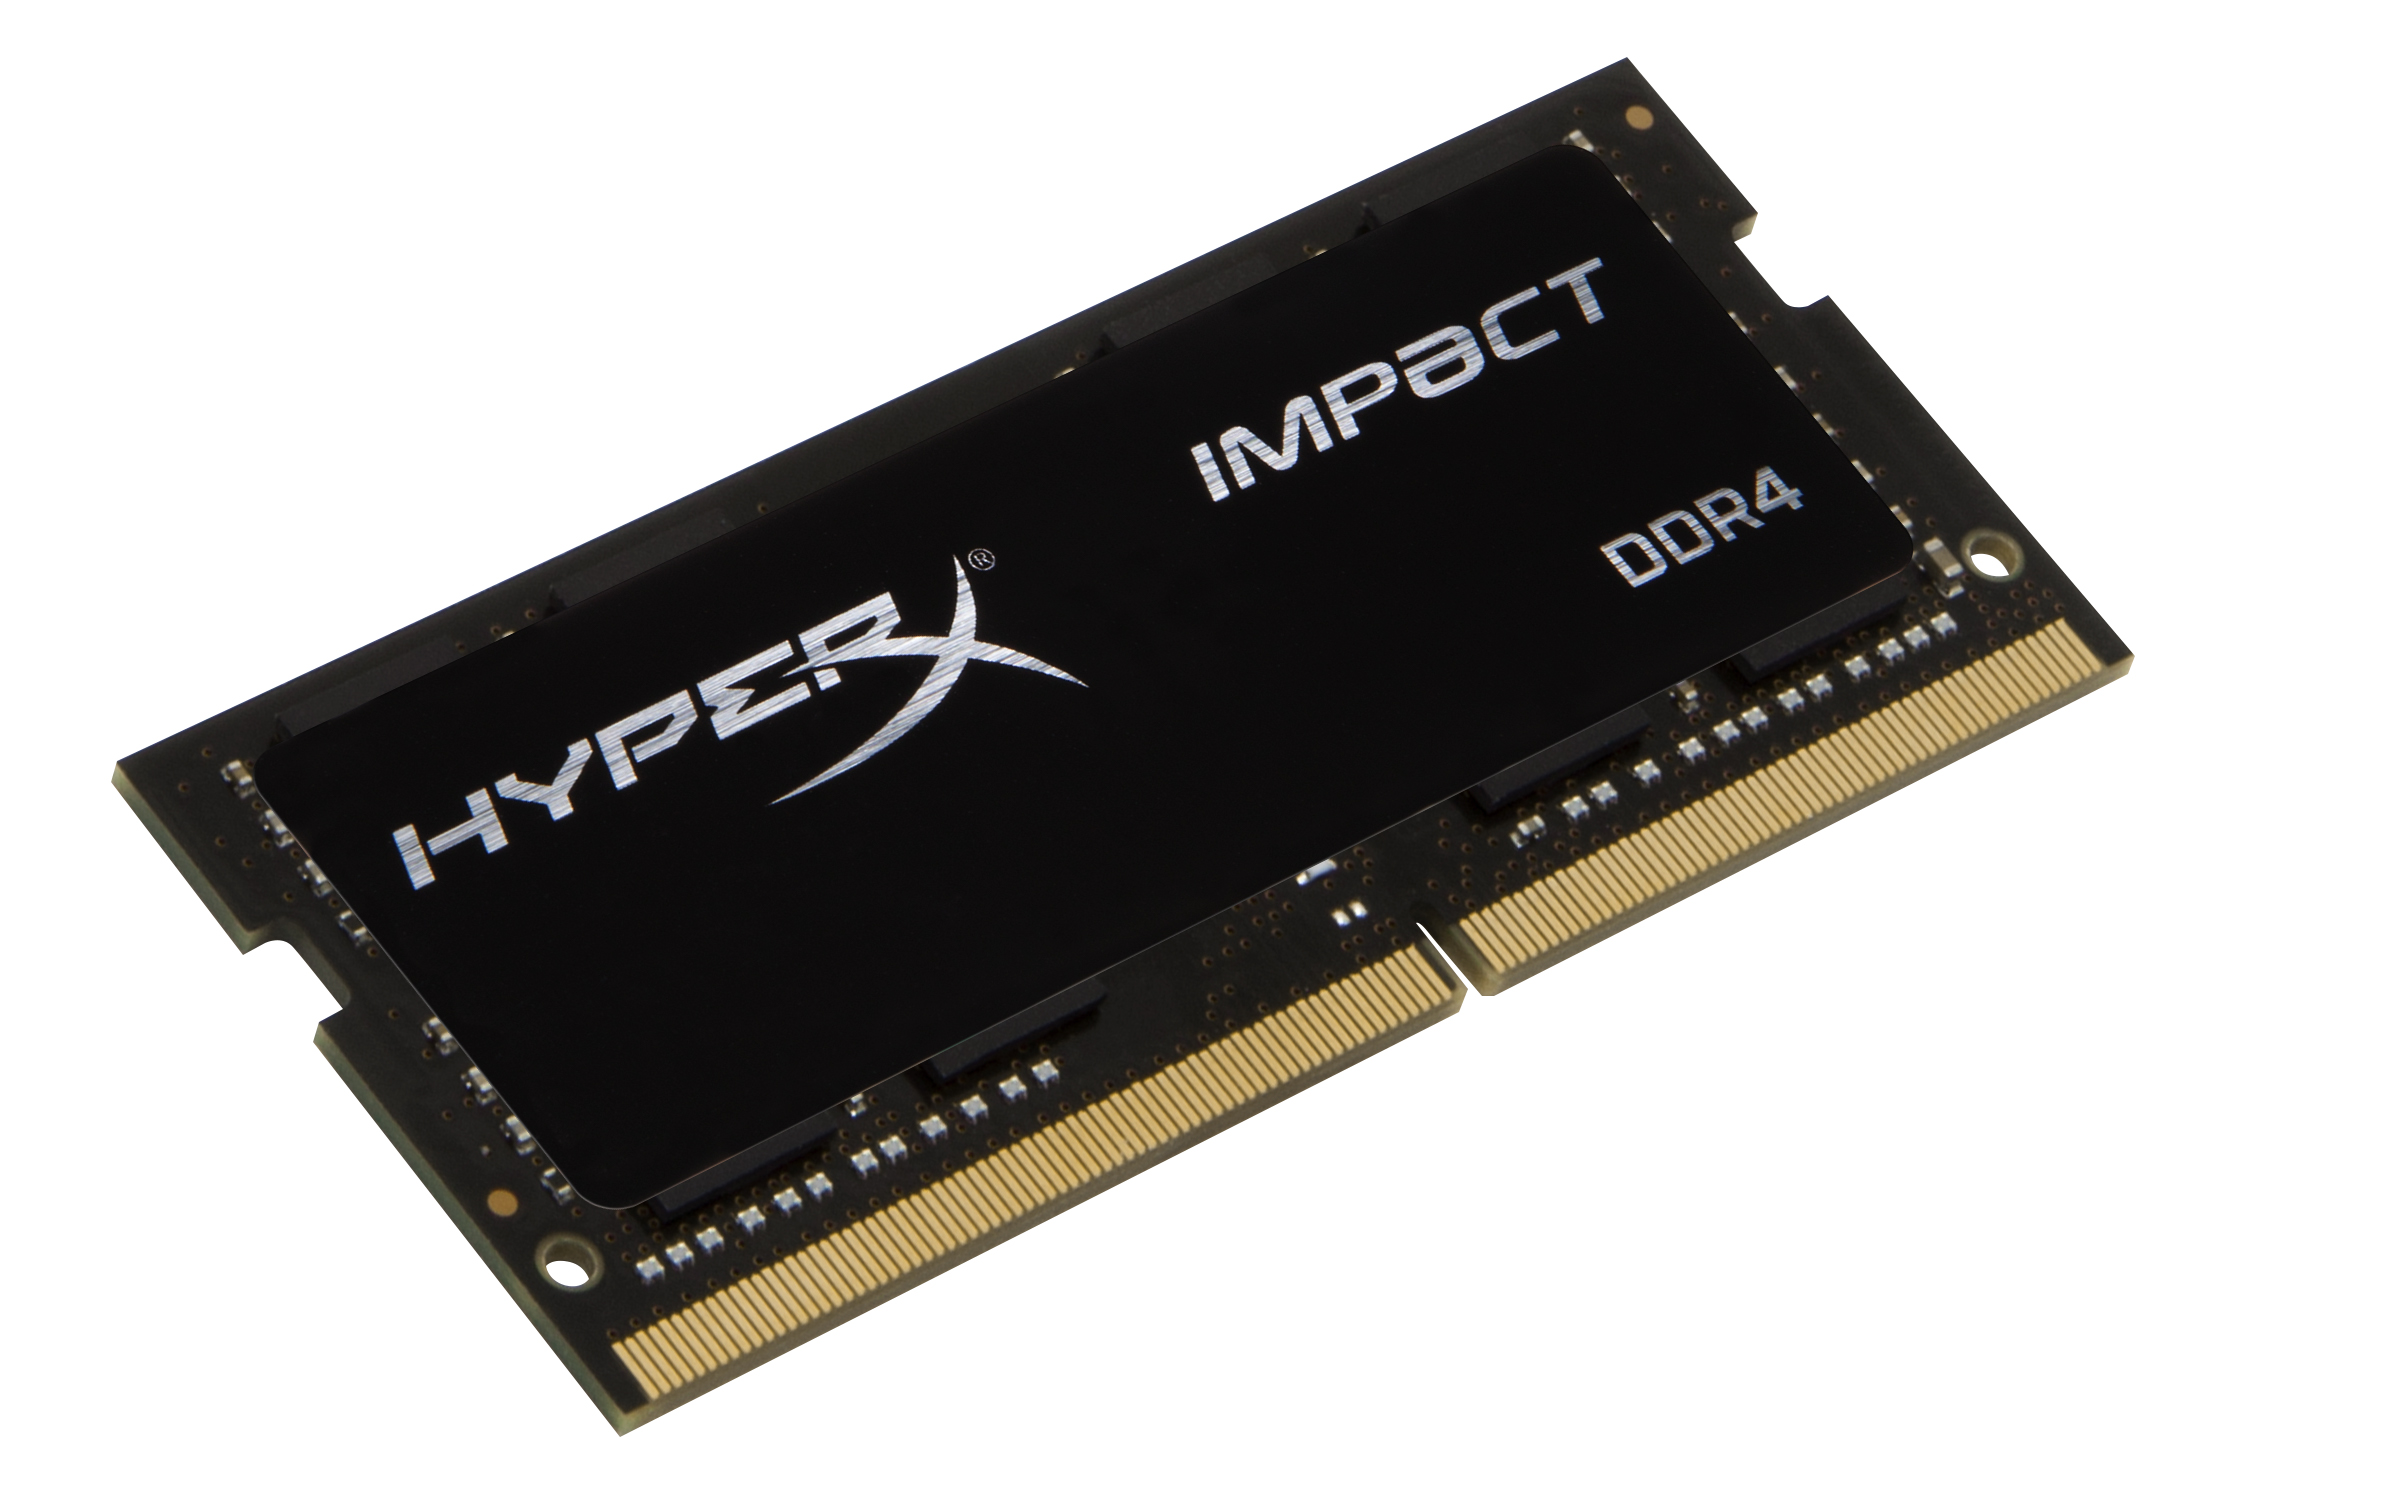 hyperx impact ddr4 dual rank hyperx impact dualrank ddr4 so dimm 1 hr 26 05 2017 15 32 HyperX ประเดิมปี 2563 ด้วยไลน์ผลิตภัณฑ์สำหรับพีซีและเครื่องเล่นเกมคอนโซลรุ่นใหม่ที่งาน CES และพร้อมรักษาความเป็นผู้นำในตลาดต่อไป